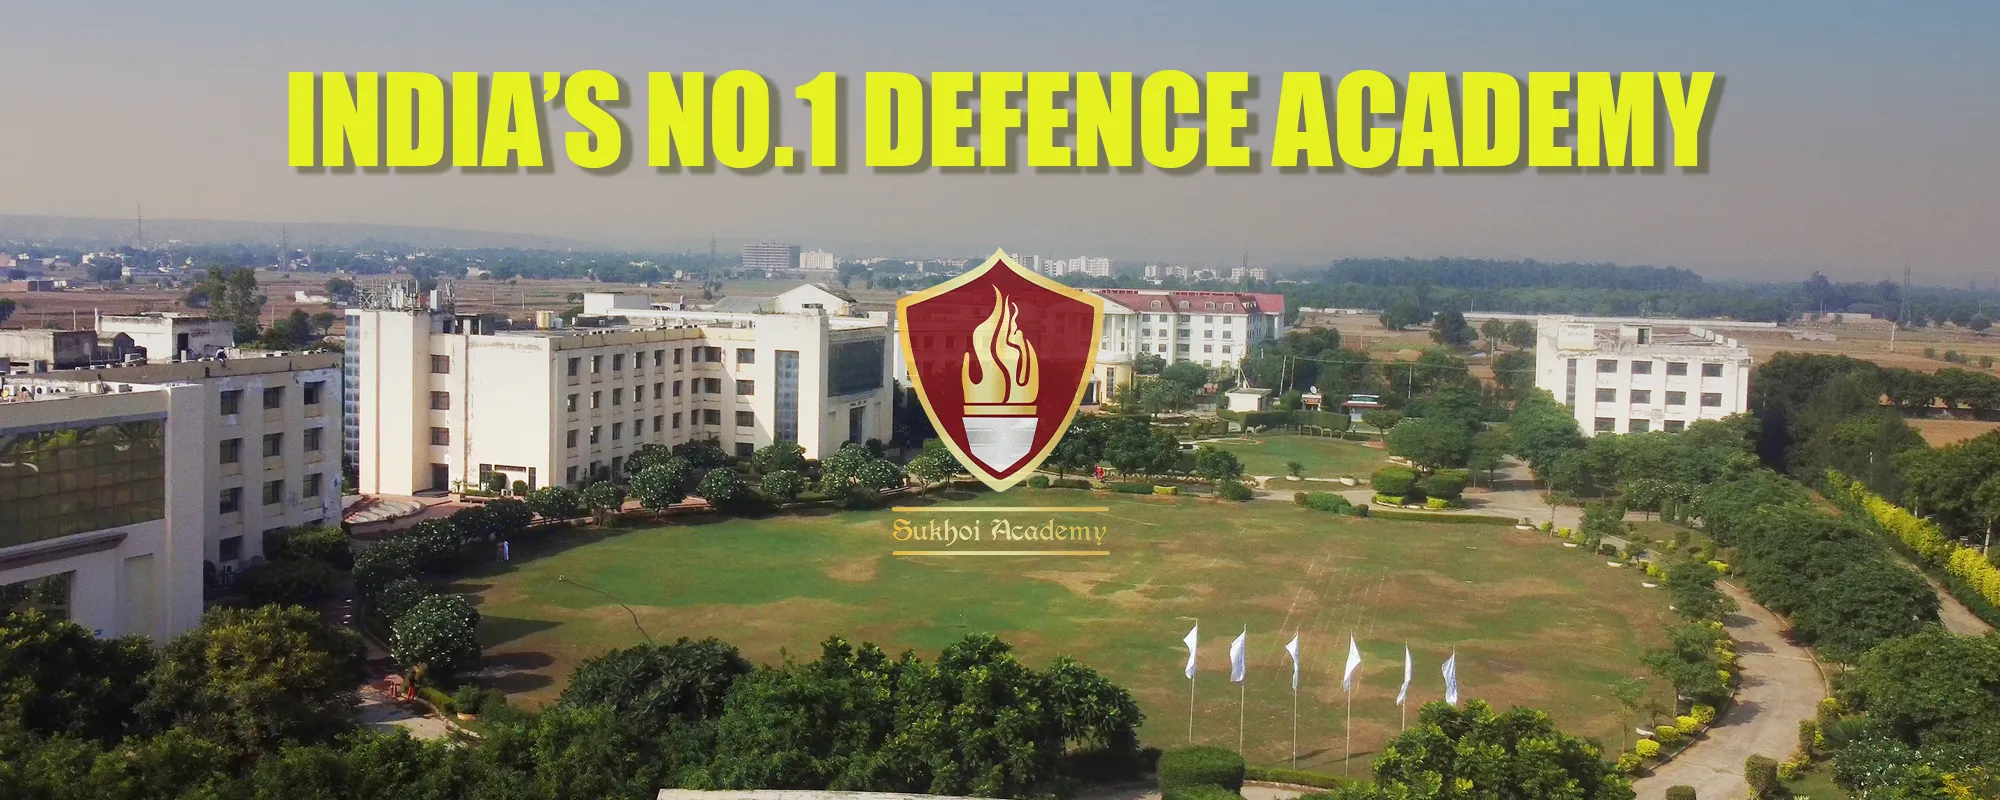 indian no 1 defence academy